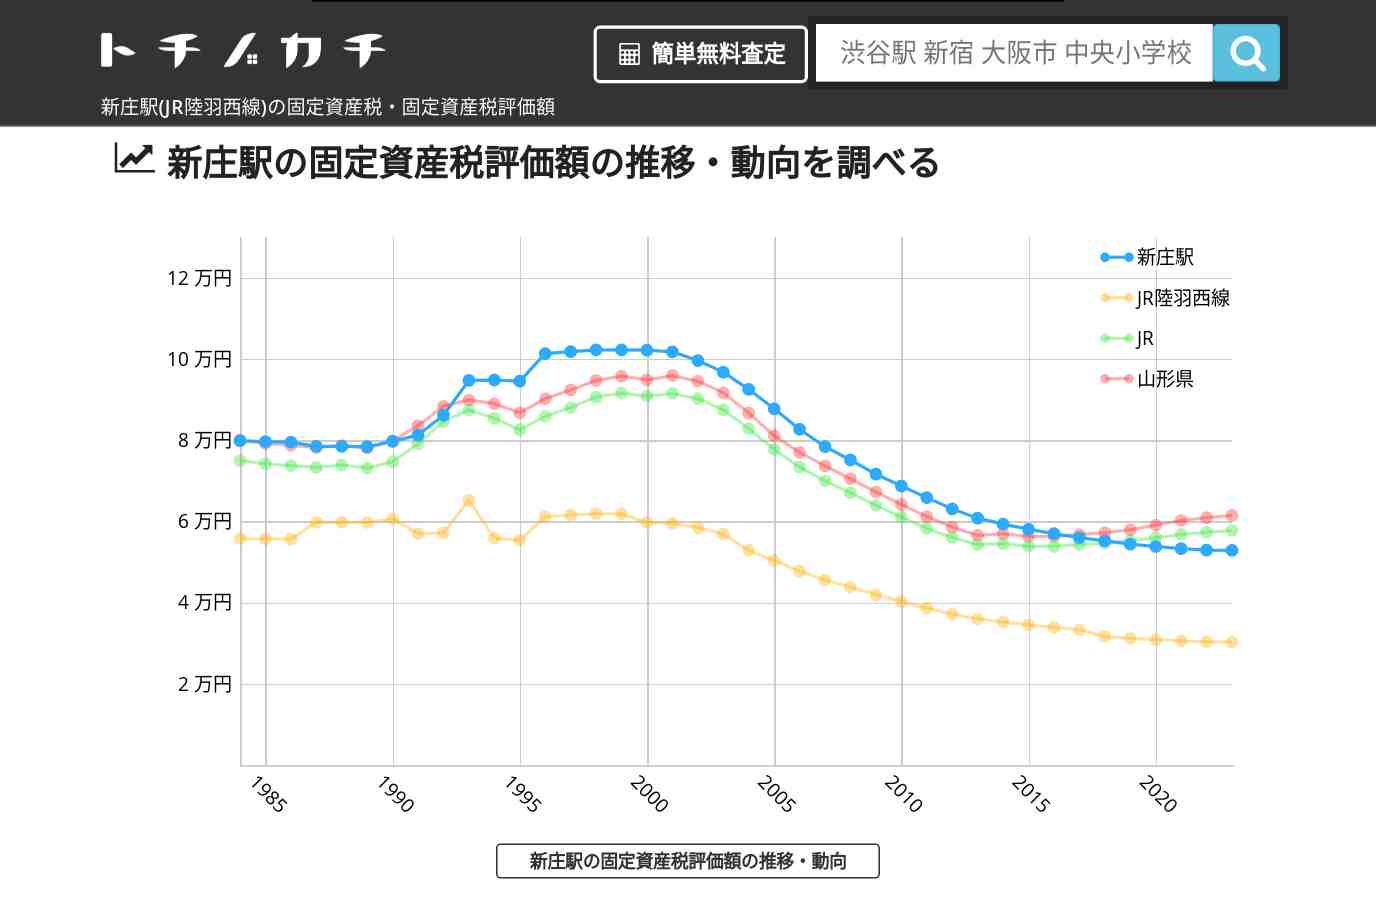 新庄駅(JR陸羽西線)の固定資産税・固定資産税評価額 | トチノカチ